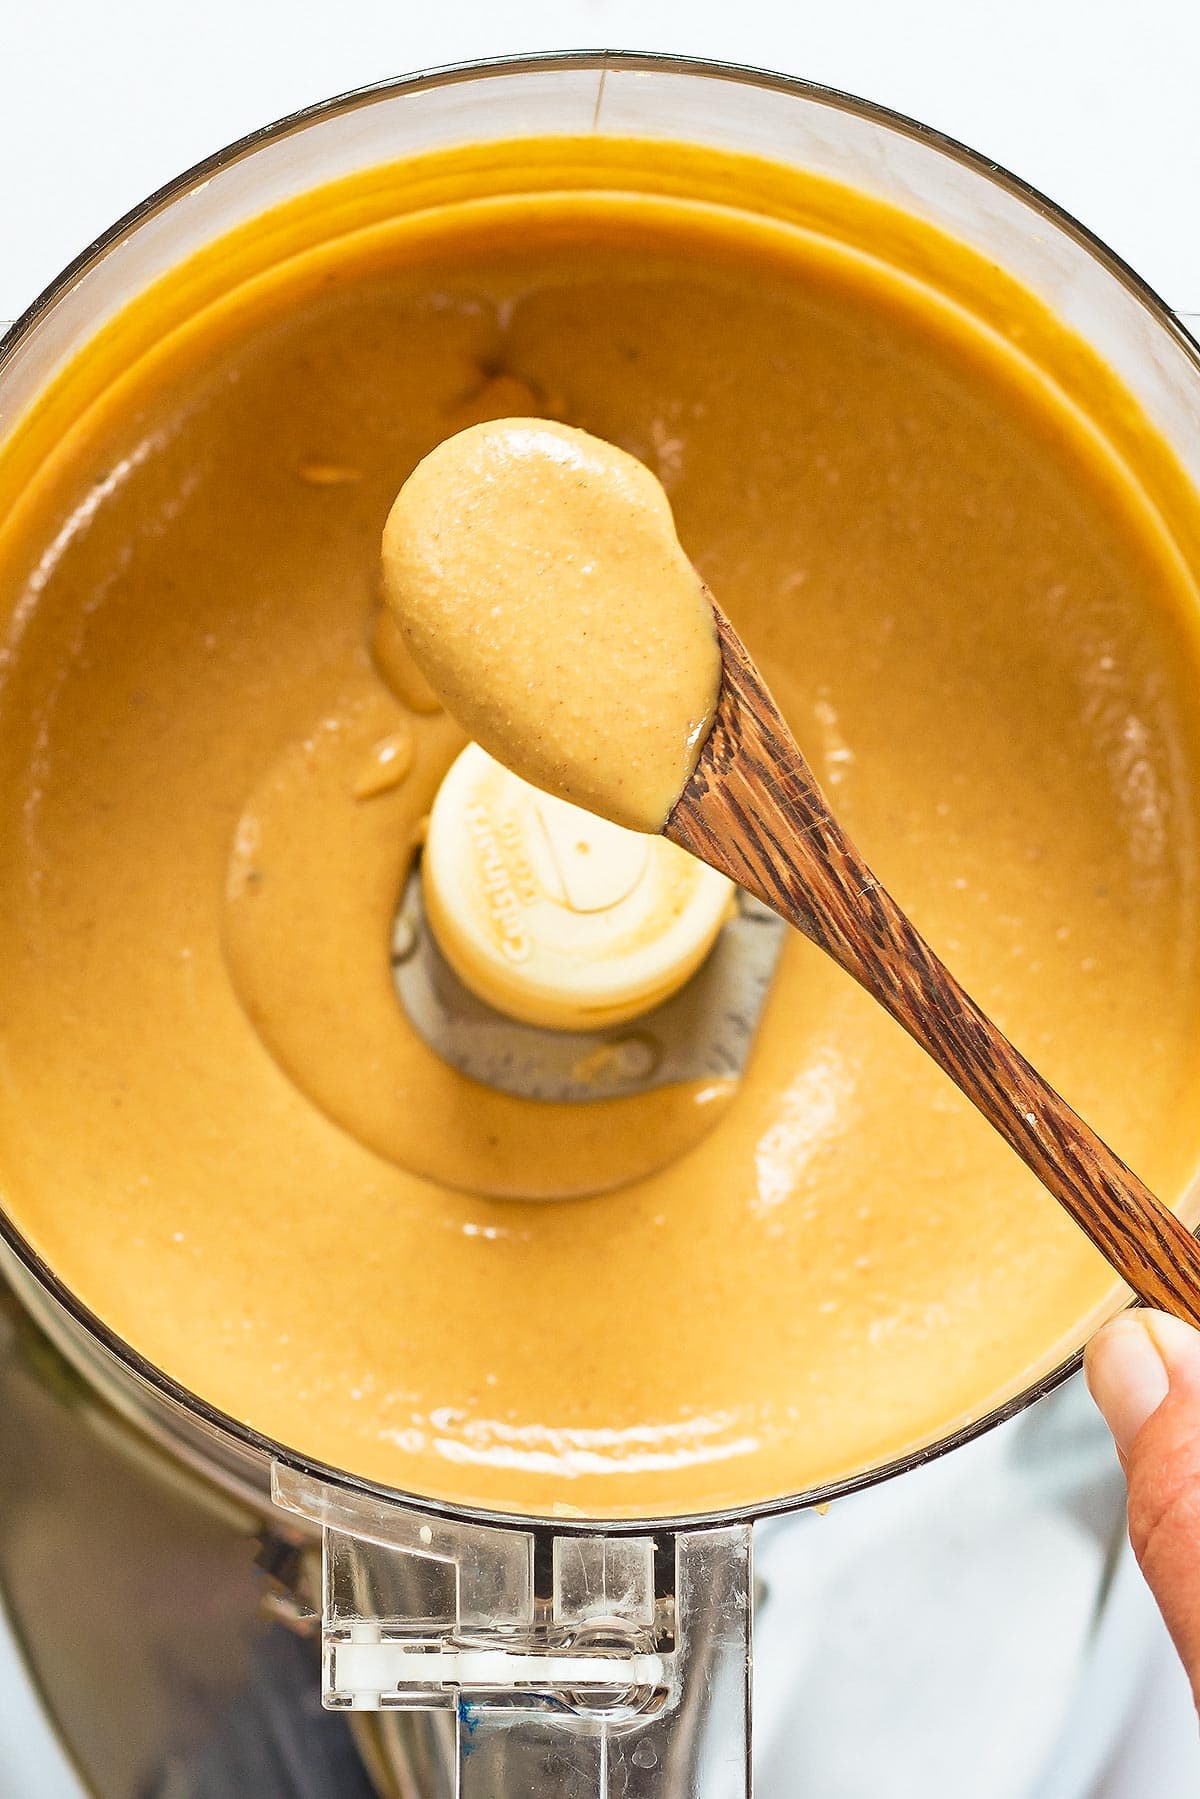 Creamy Peanut Butter in Food Processor